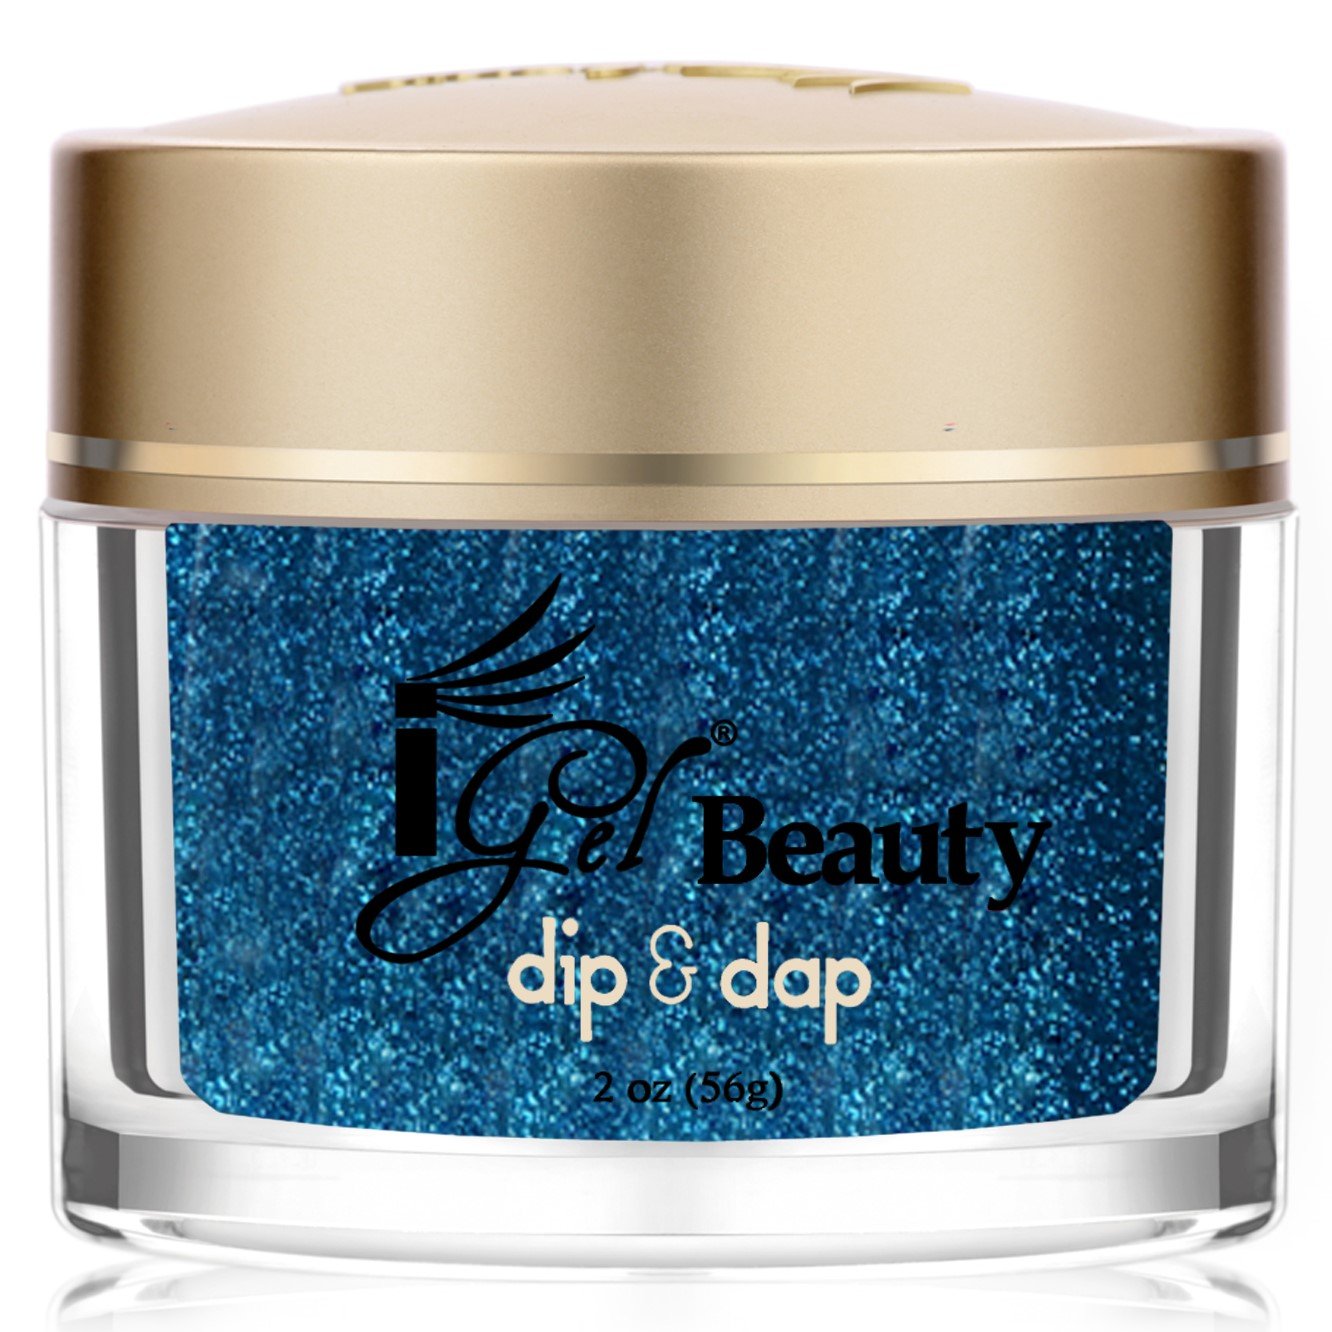 iGel Beauty - Dip & Dap Powder - DD137 Night Sky